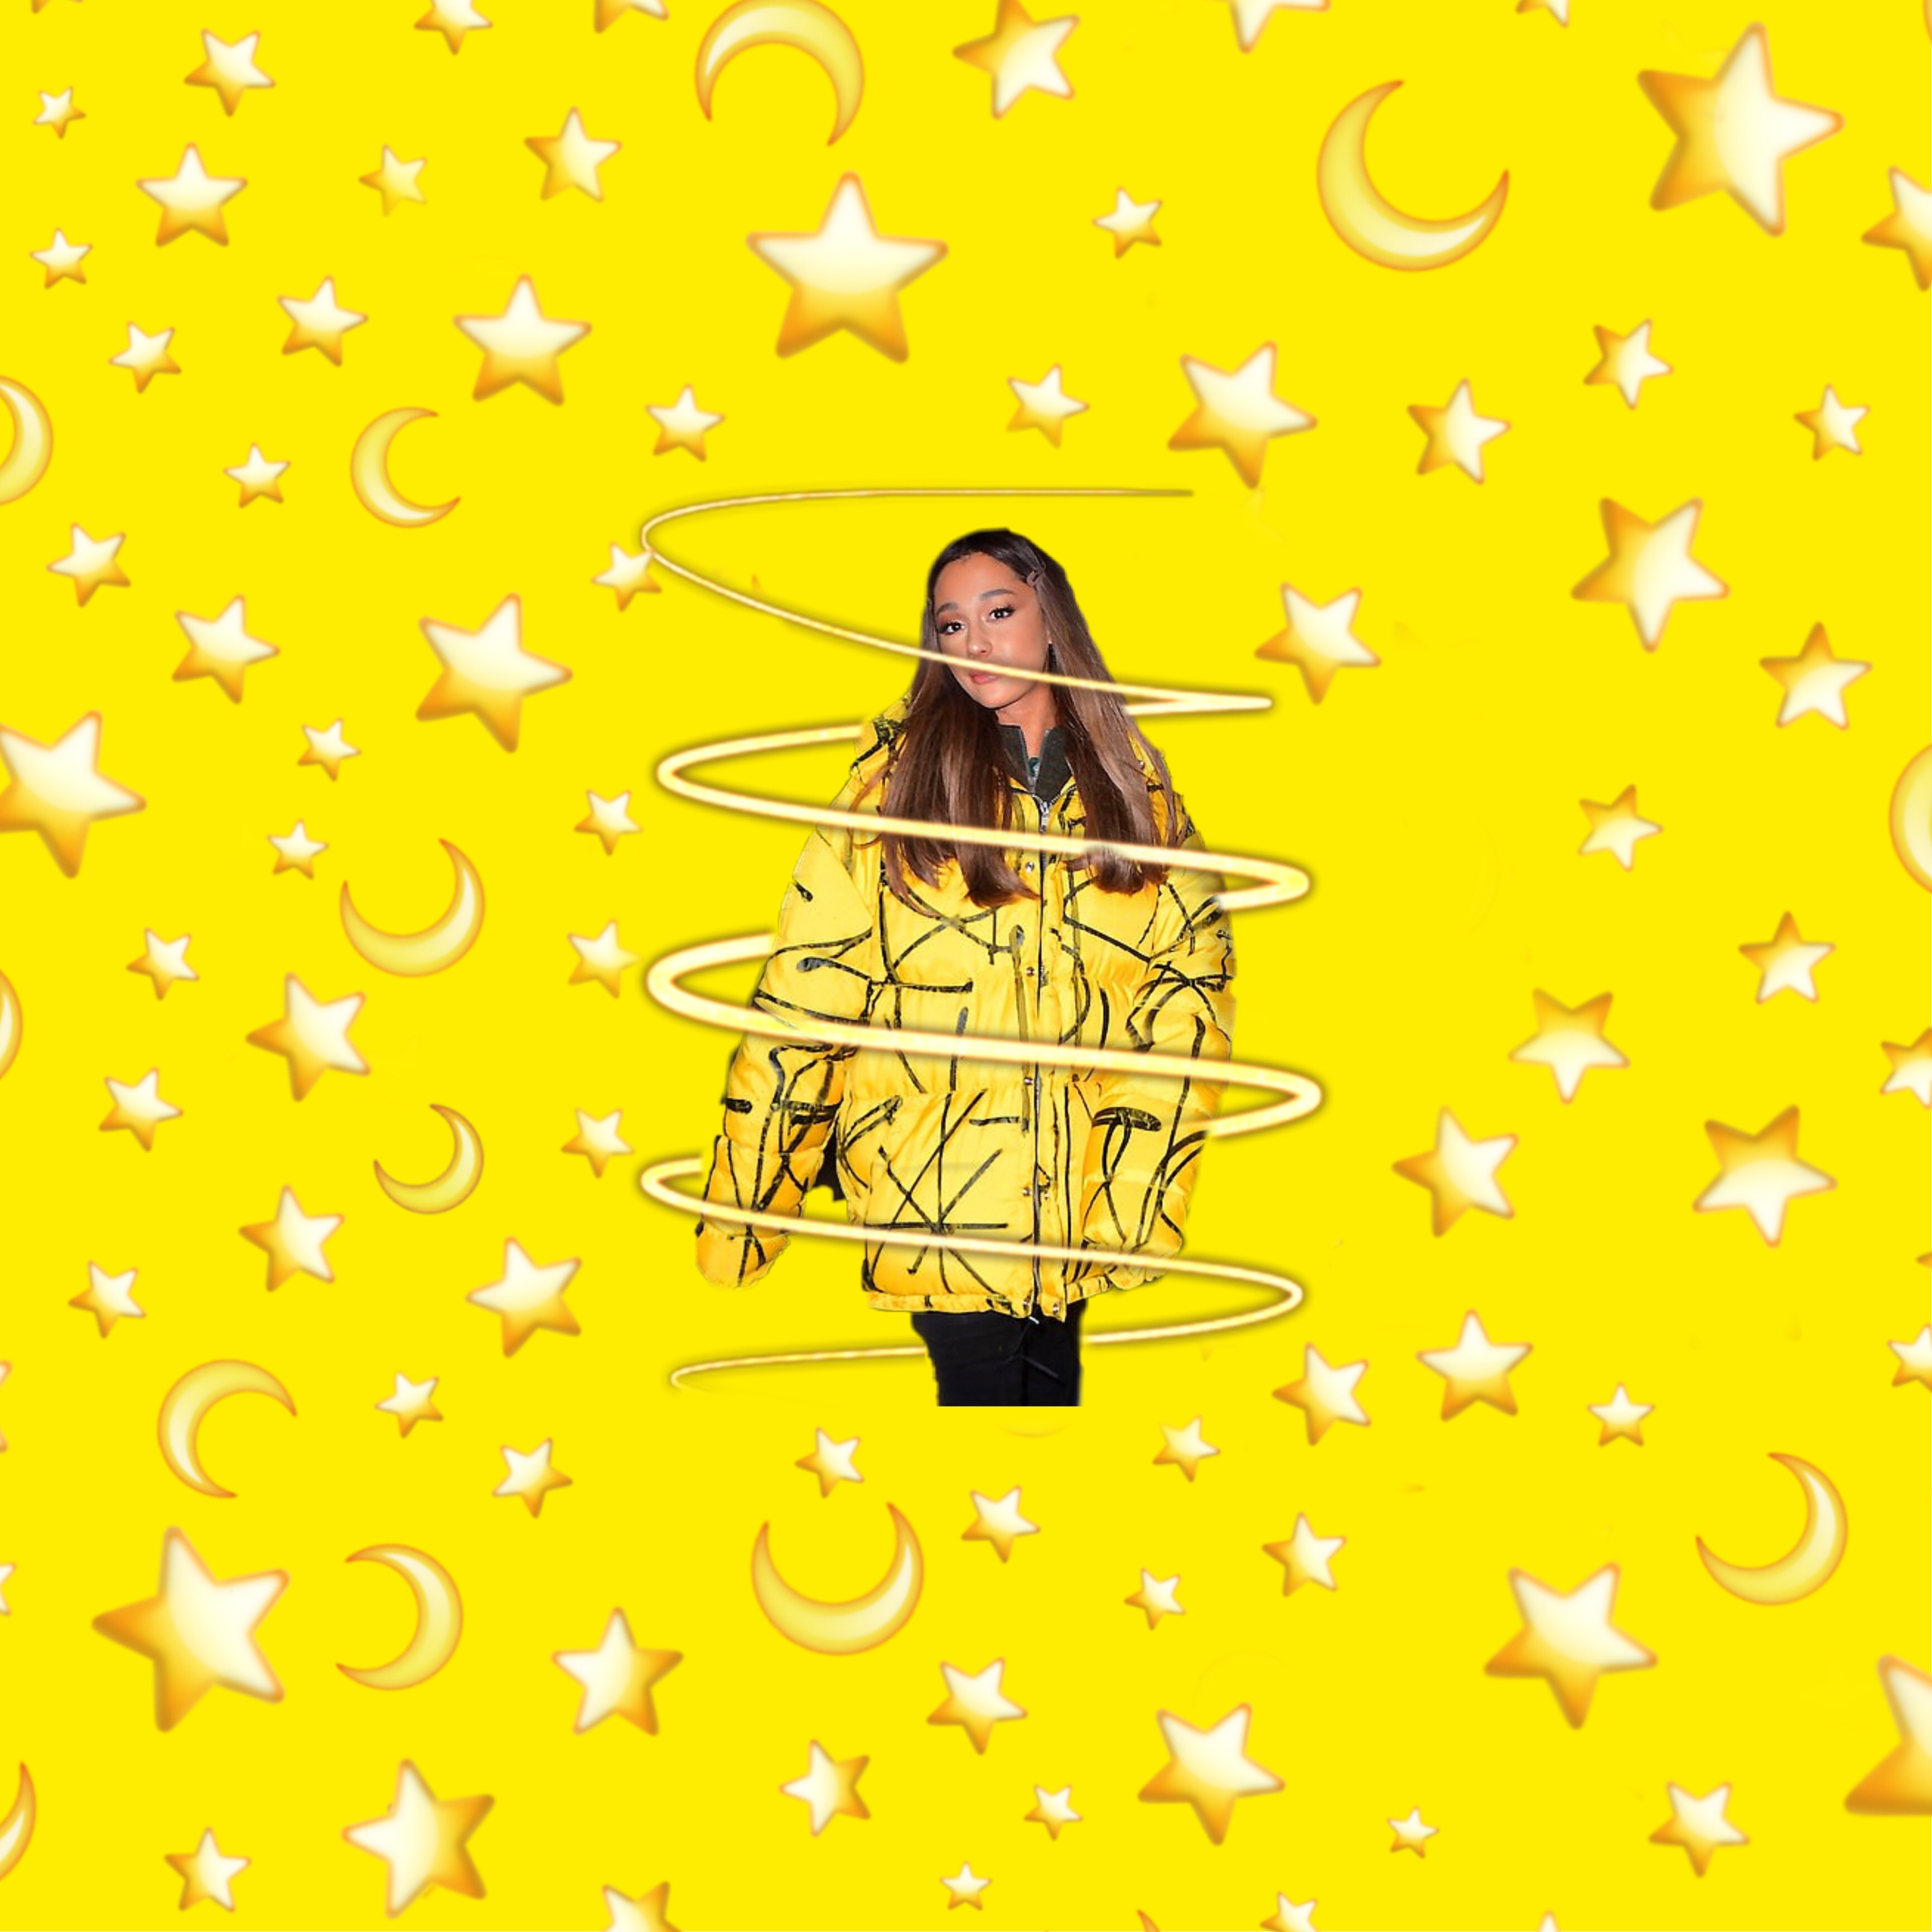 Ariana grande: YELLOW Image by edith.carpner